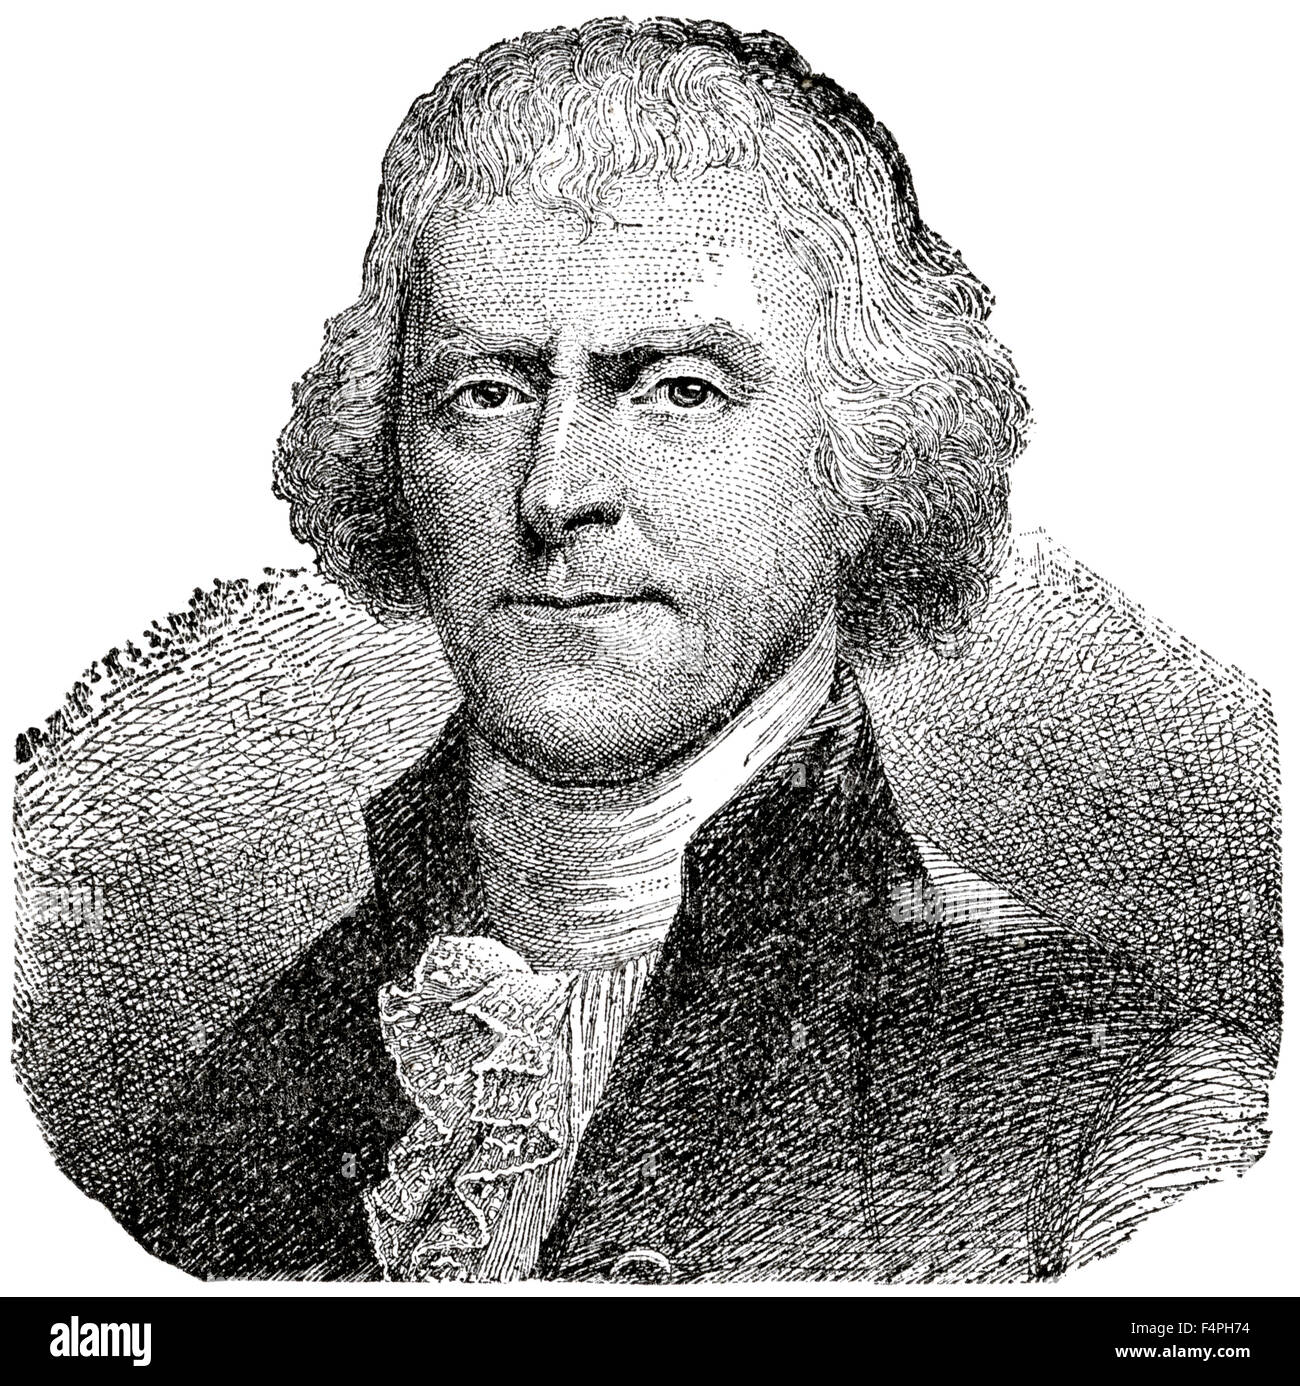 Thomas Jefferson (1743-1826), 3rd President of the United States, Engraving, 1889 Stock Photo